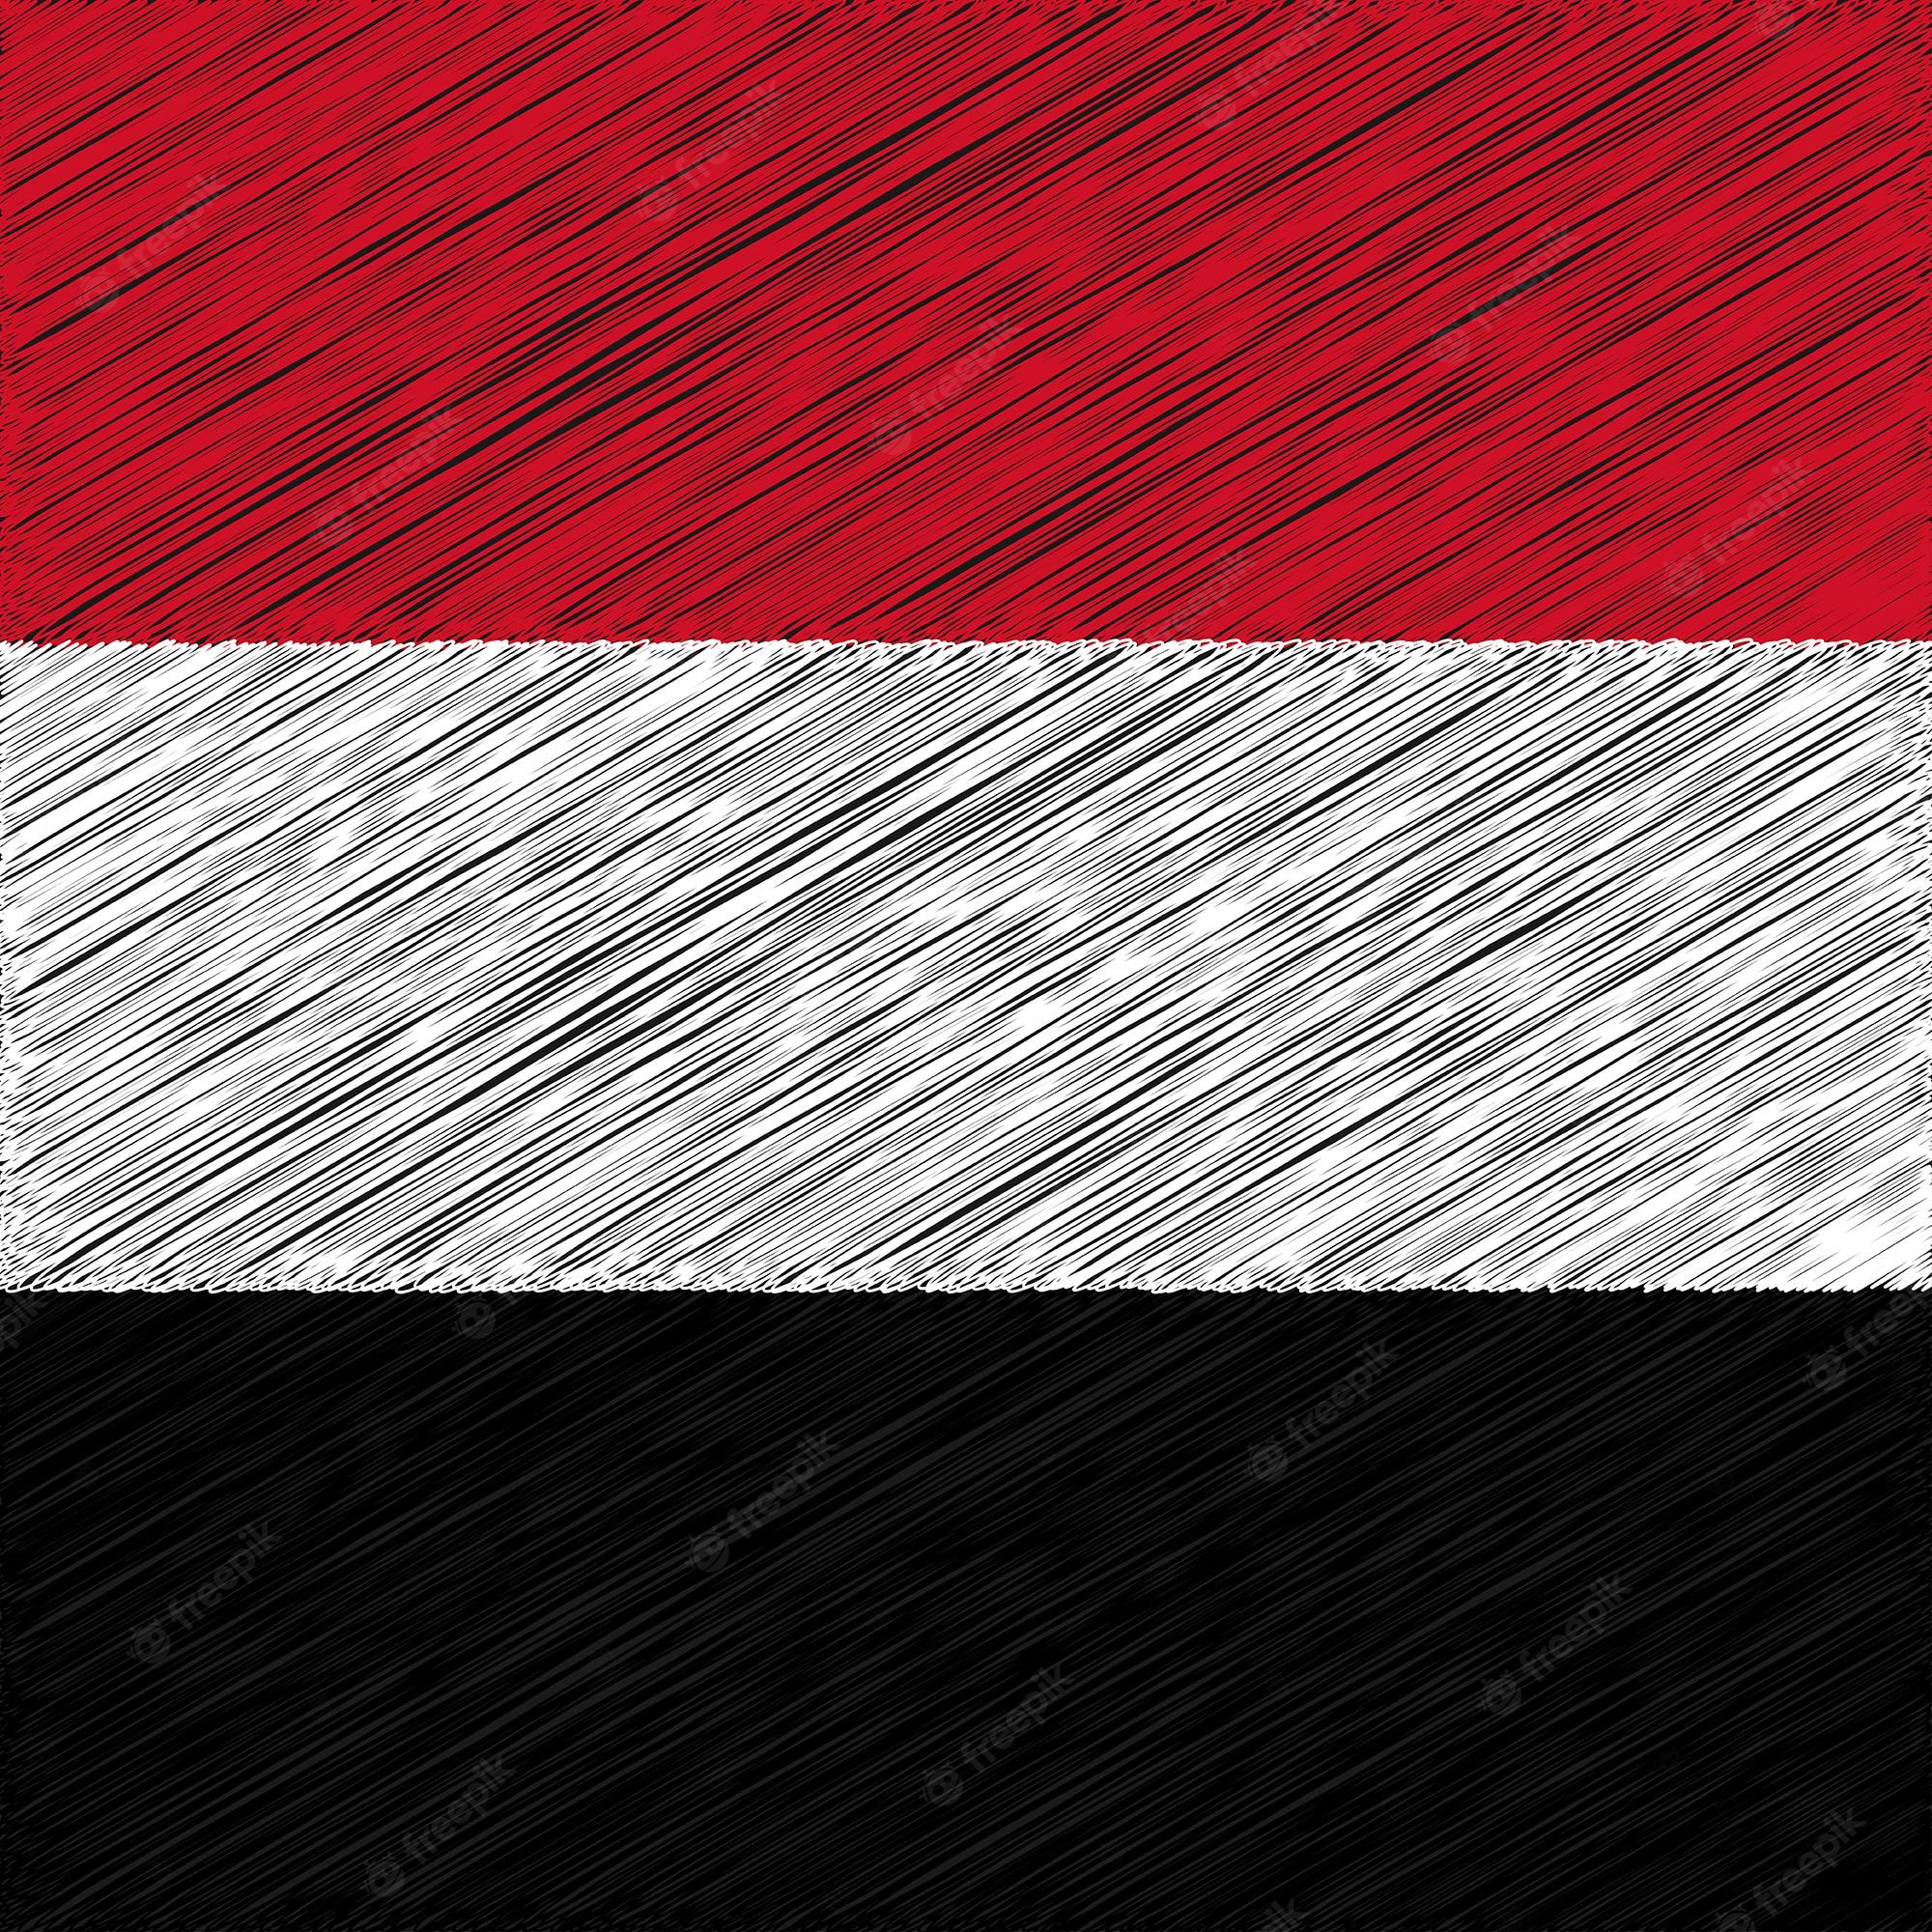 Yemen National Football Team Wallpapers